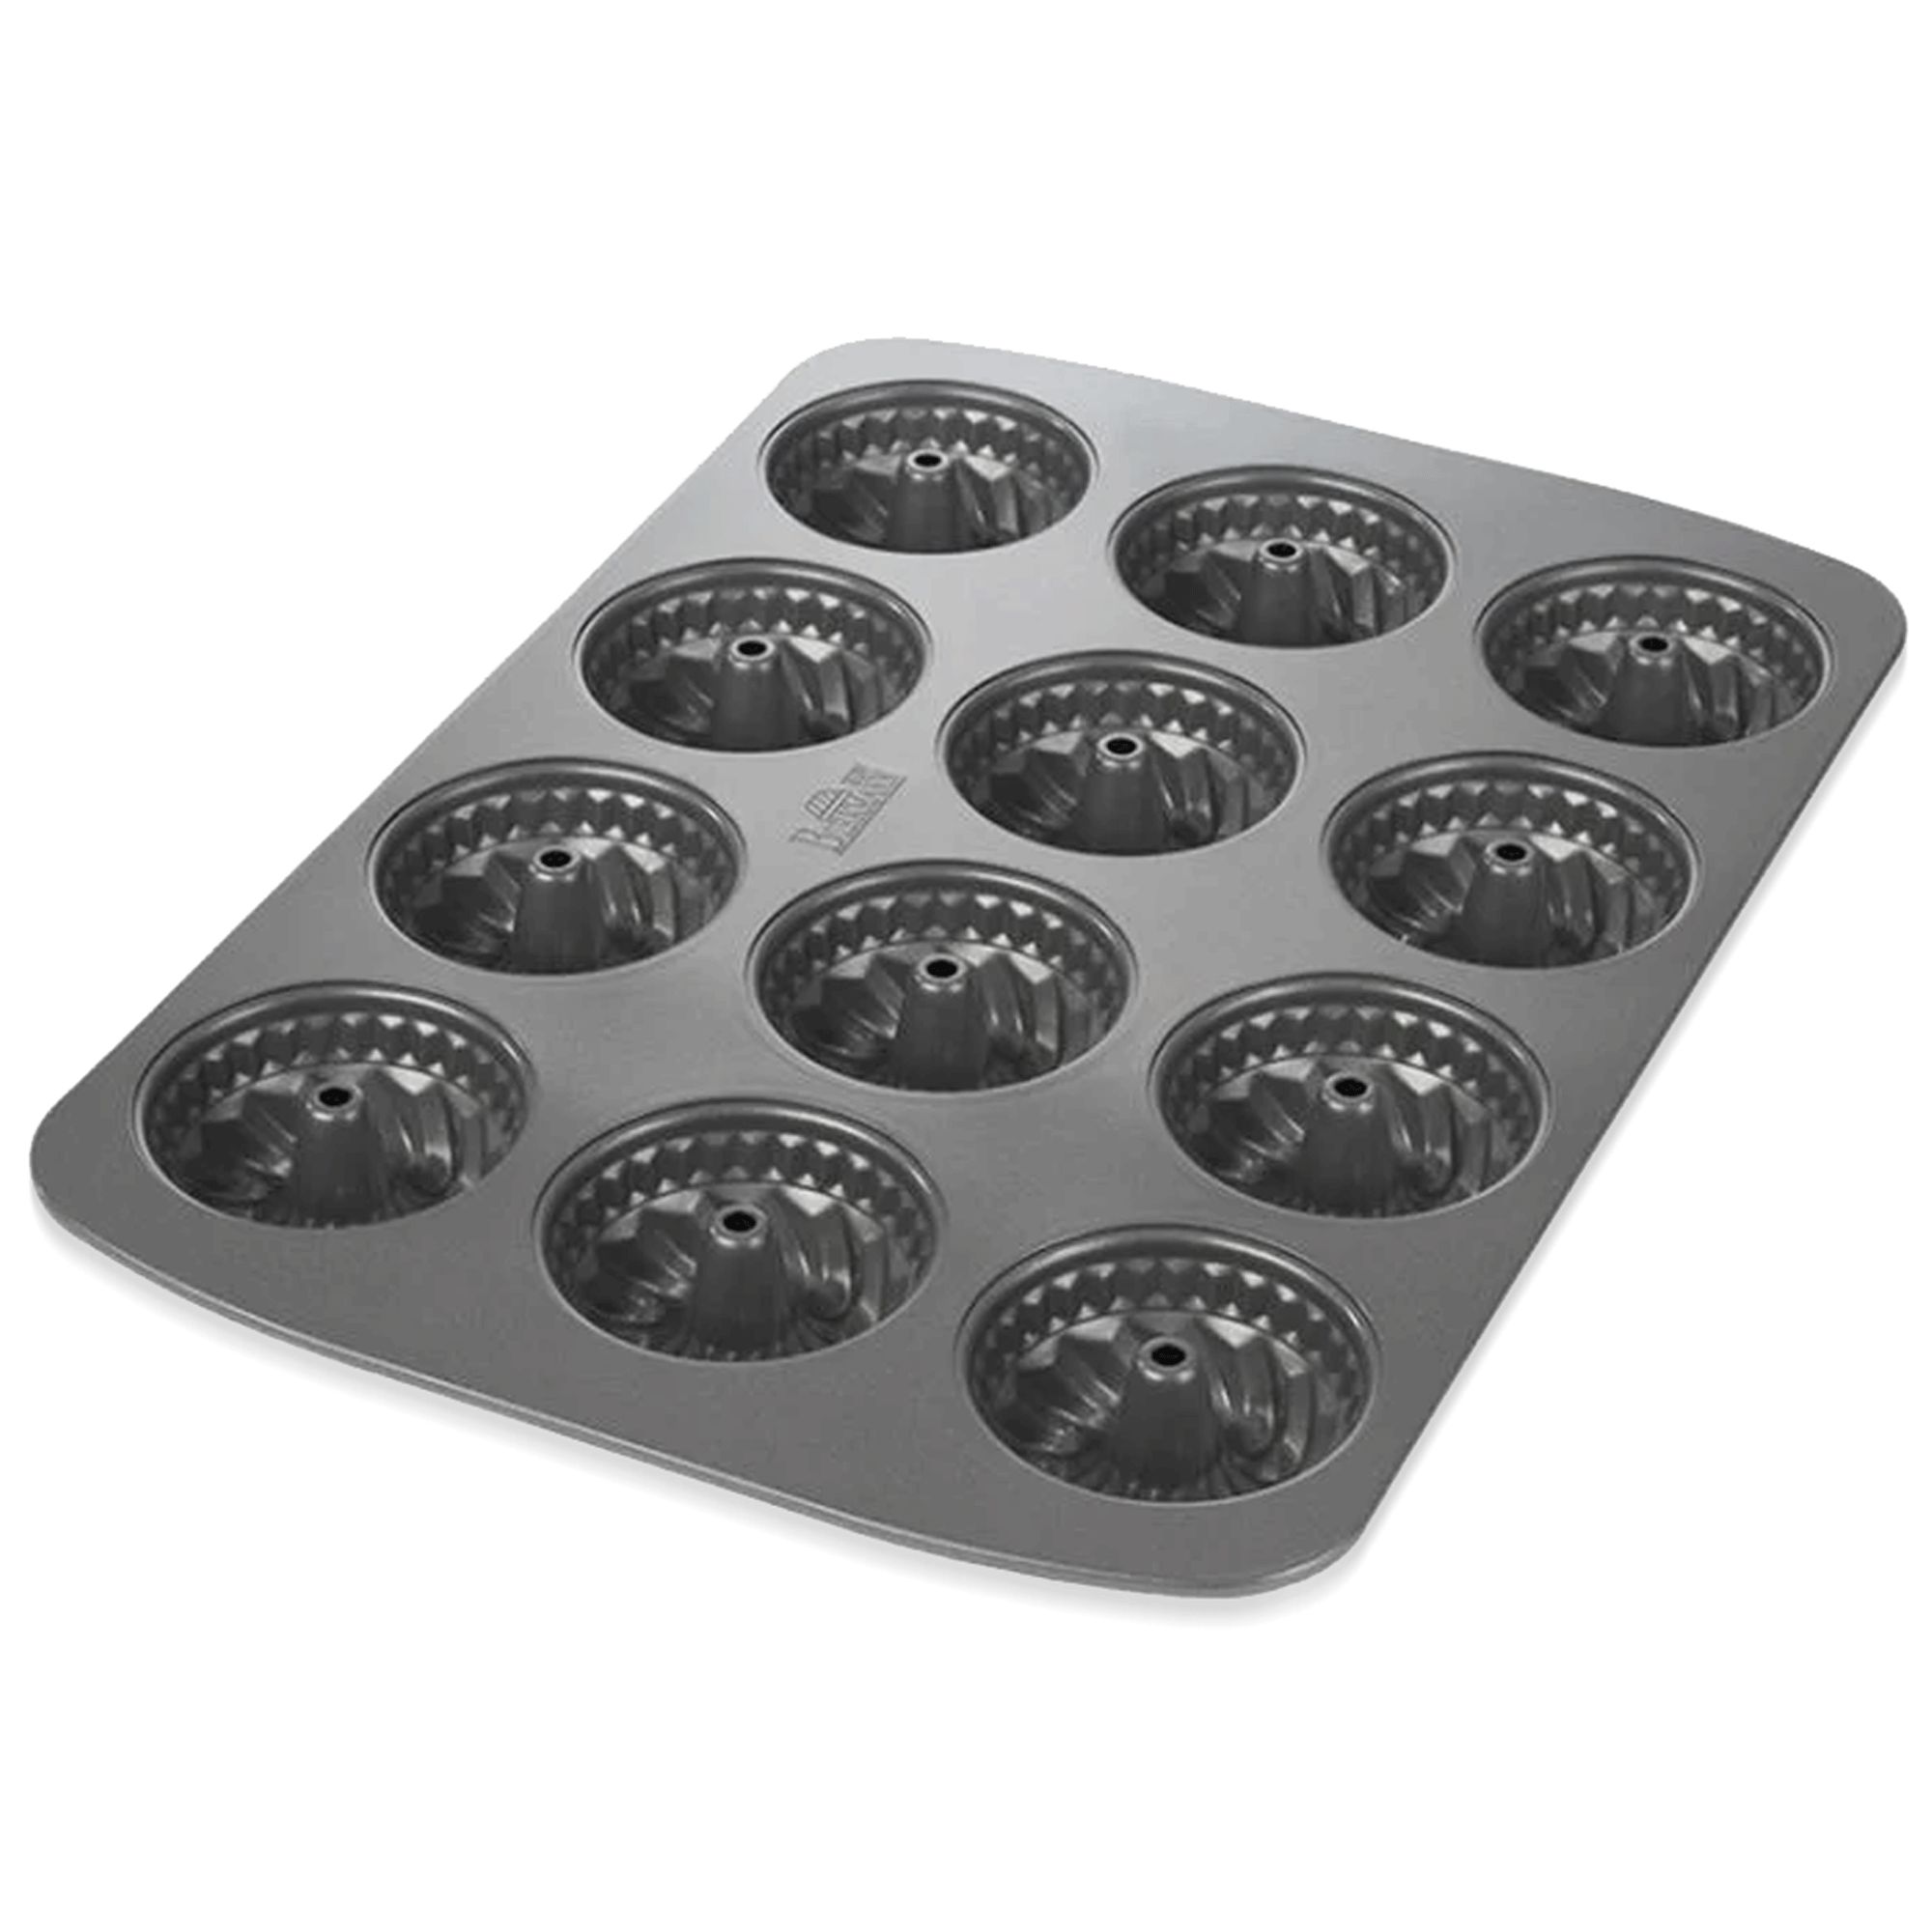 RBV Birkmann - Mini bund cake tin / 12pcs - Easy Baking